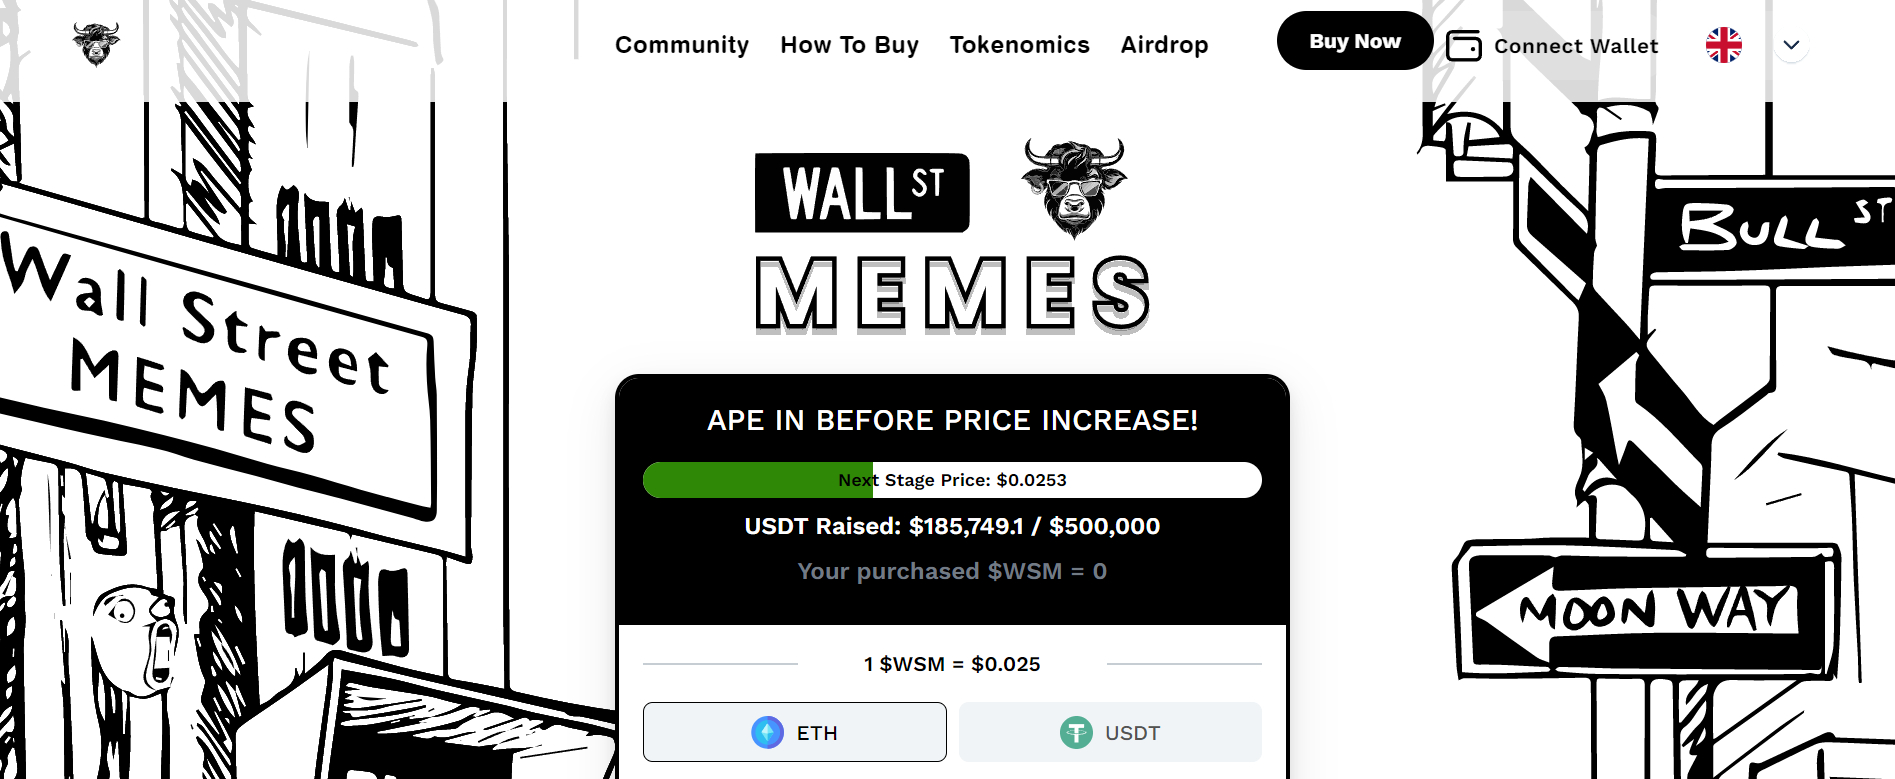 Wall Street Memes Toekomst Bitcoin: Wat Gaat de Bitcoin Doen